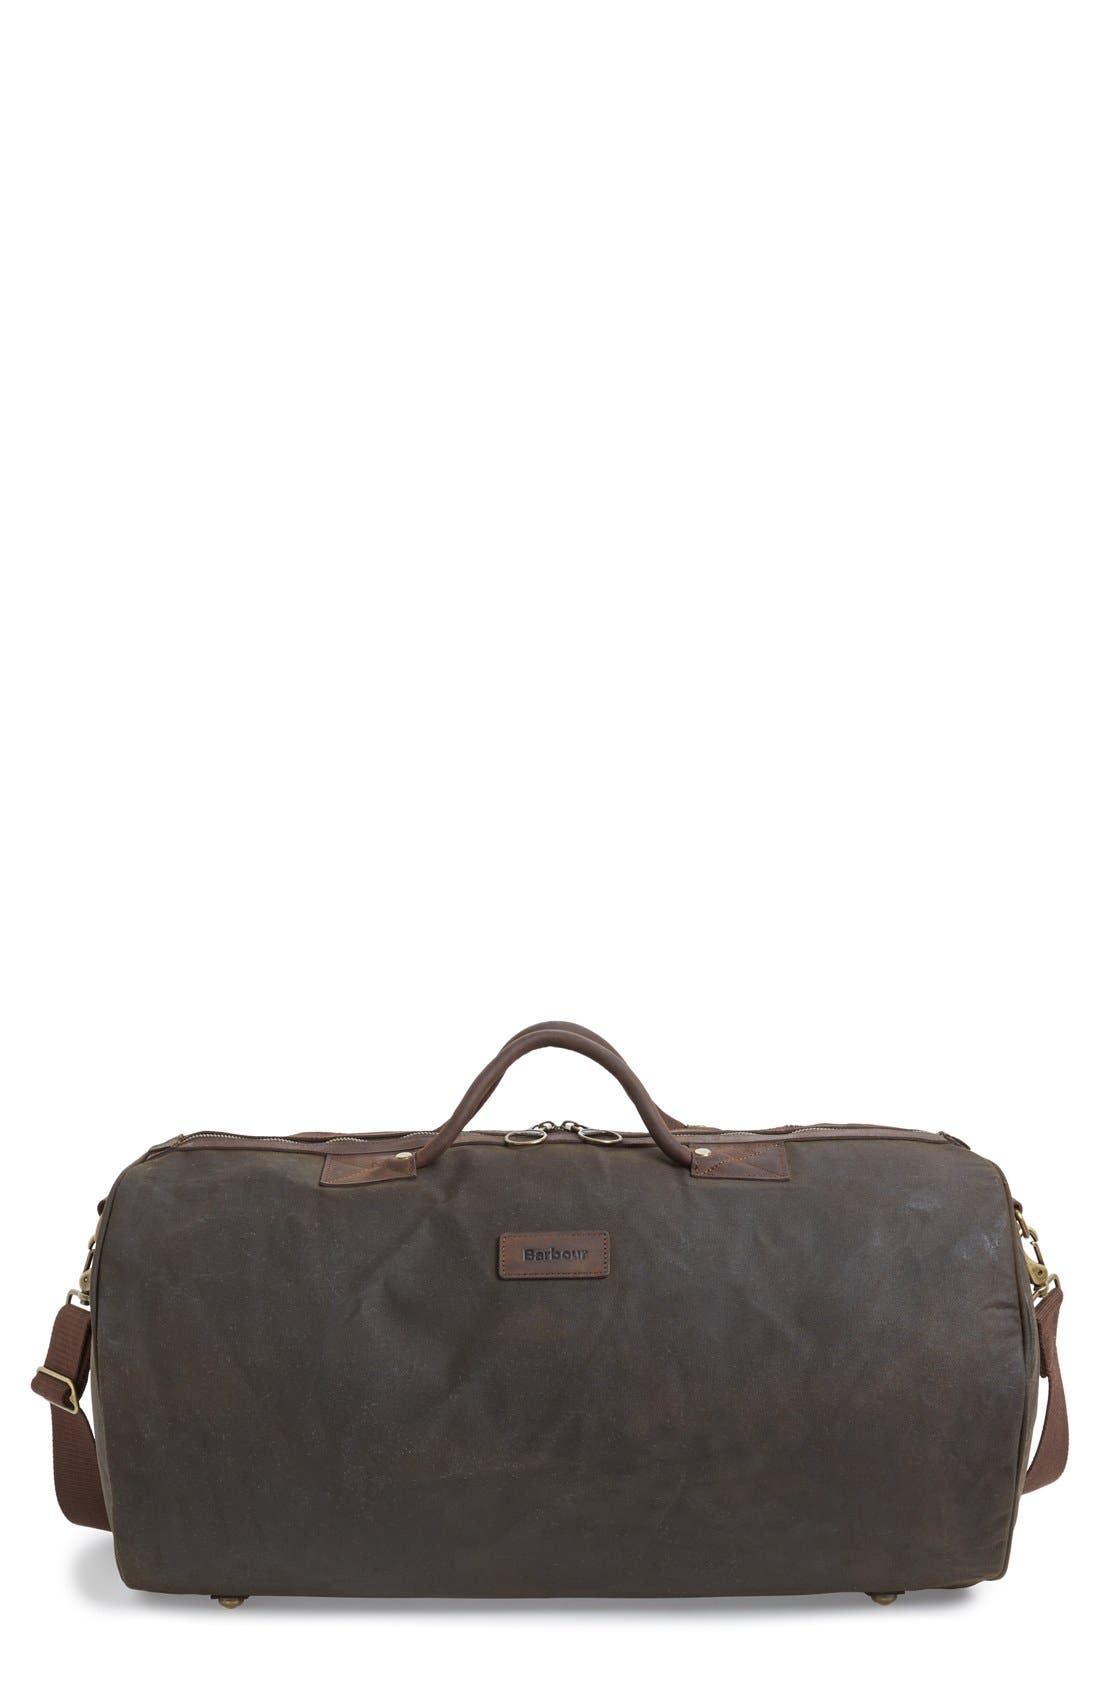 Barbour Luggage \u0026 Travel Bags | Nordstrom